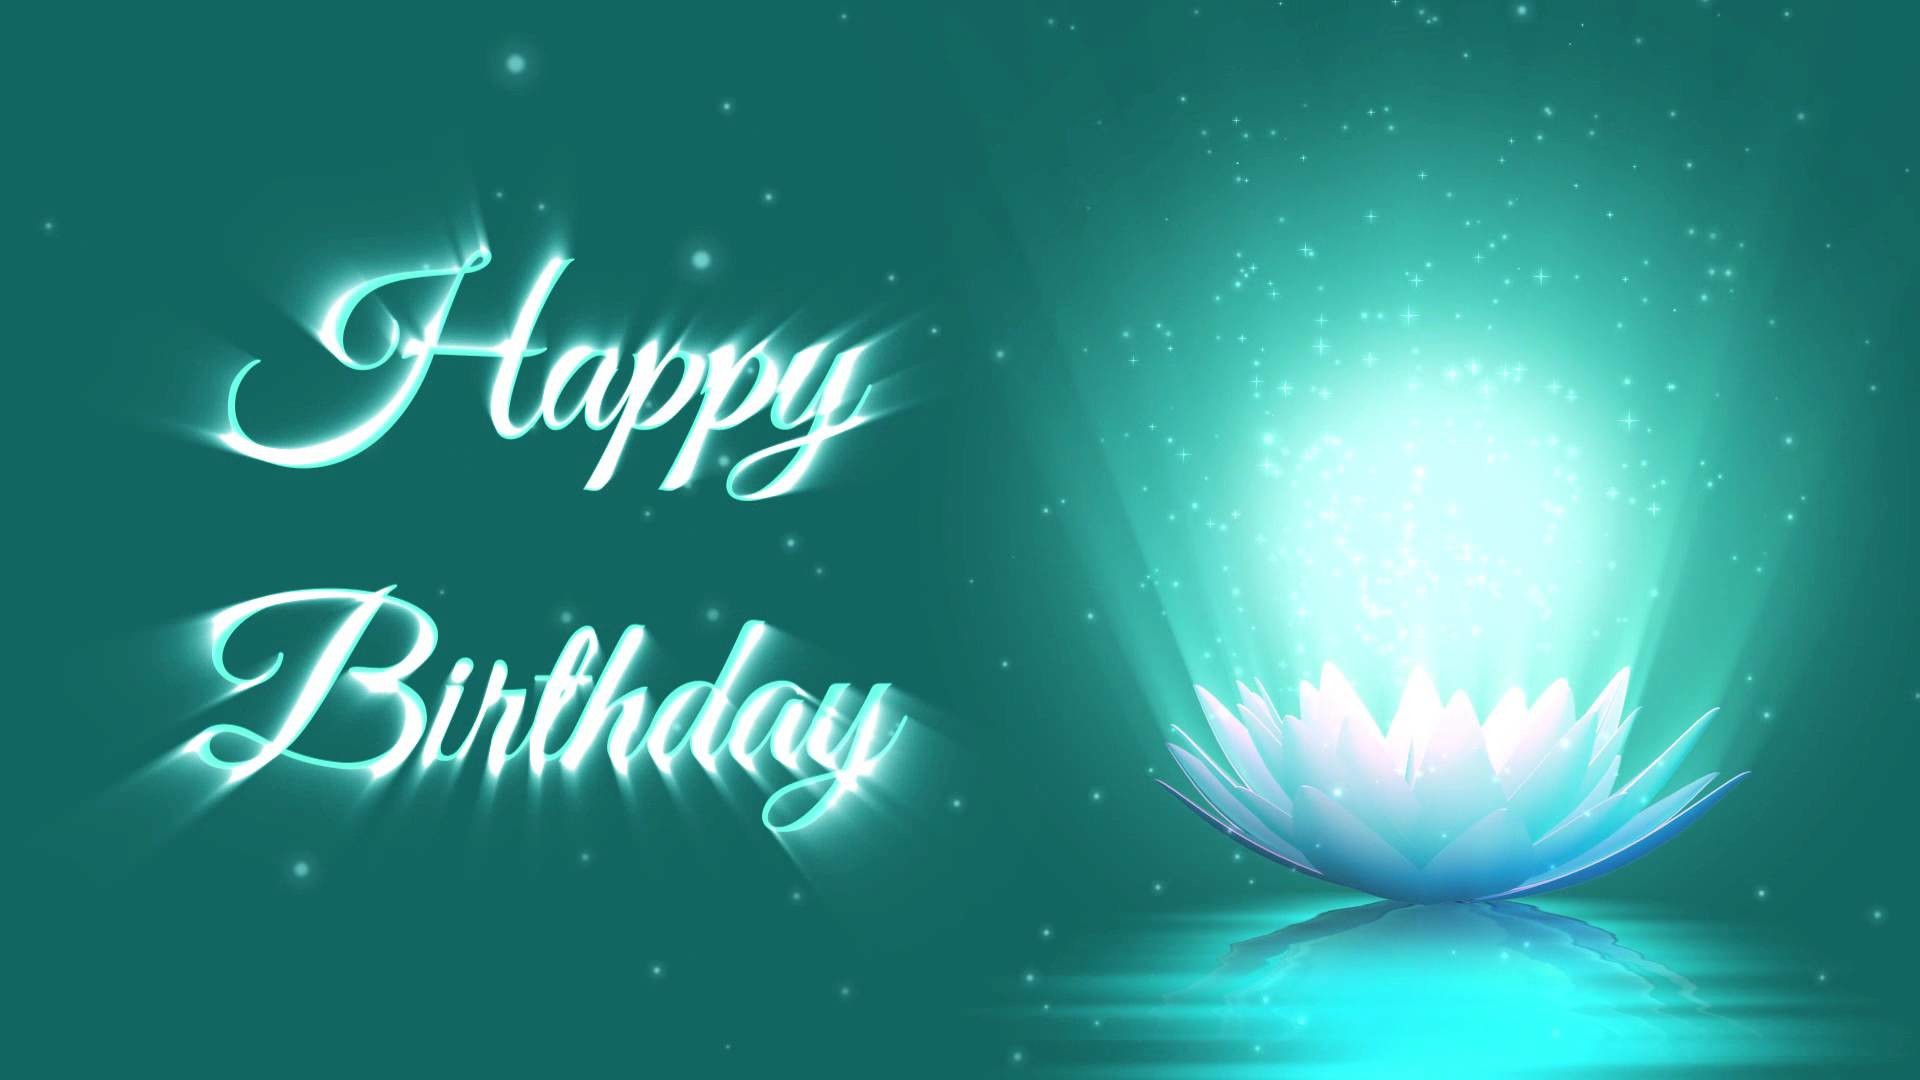 Lotus Flower Animation - Happy Birthday Wishes Background - 1920x1080  Wallpaper 